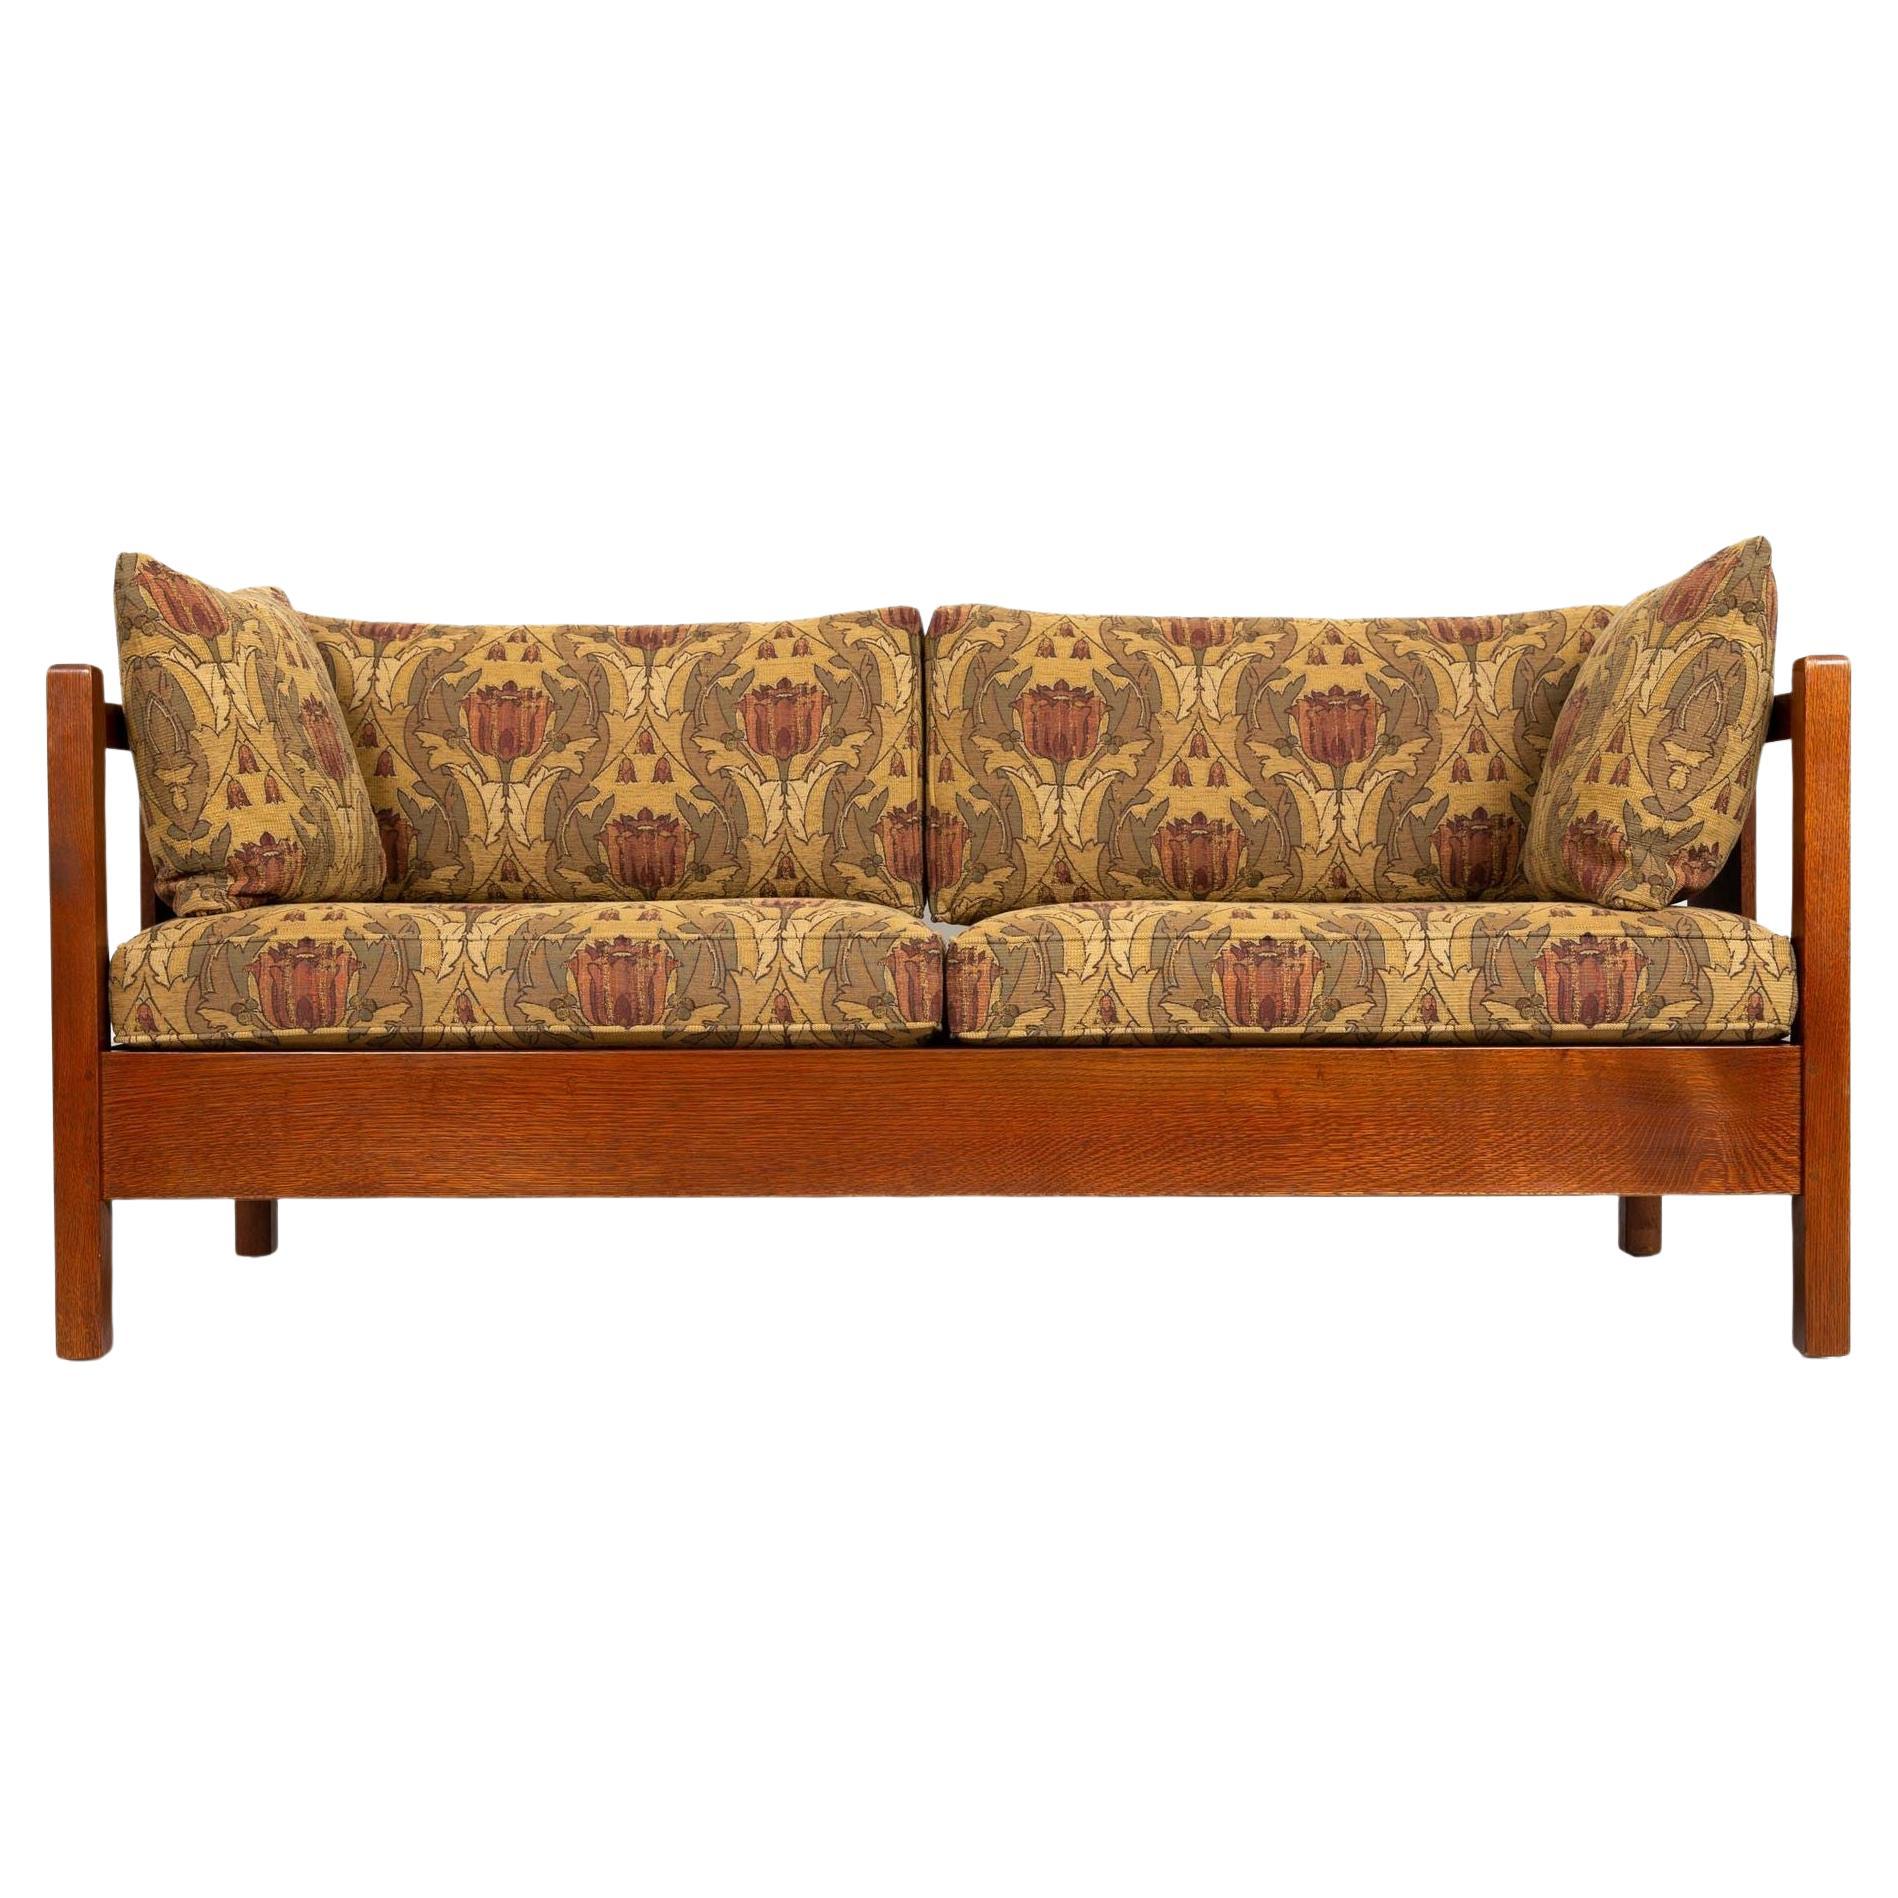 Stickley Arts & Crafts Mission Inlaid Solid Oak Sofa, Harvey Ellis Collection